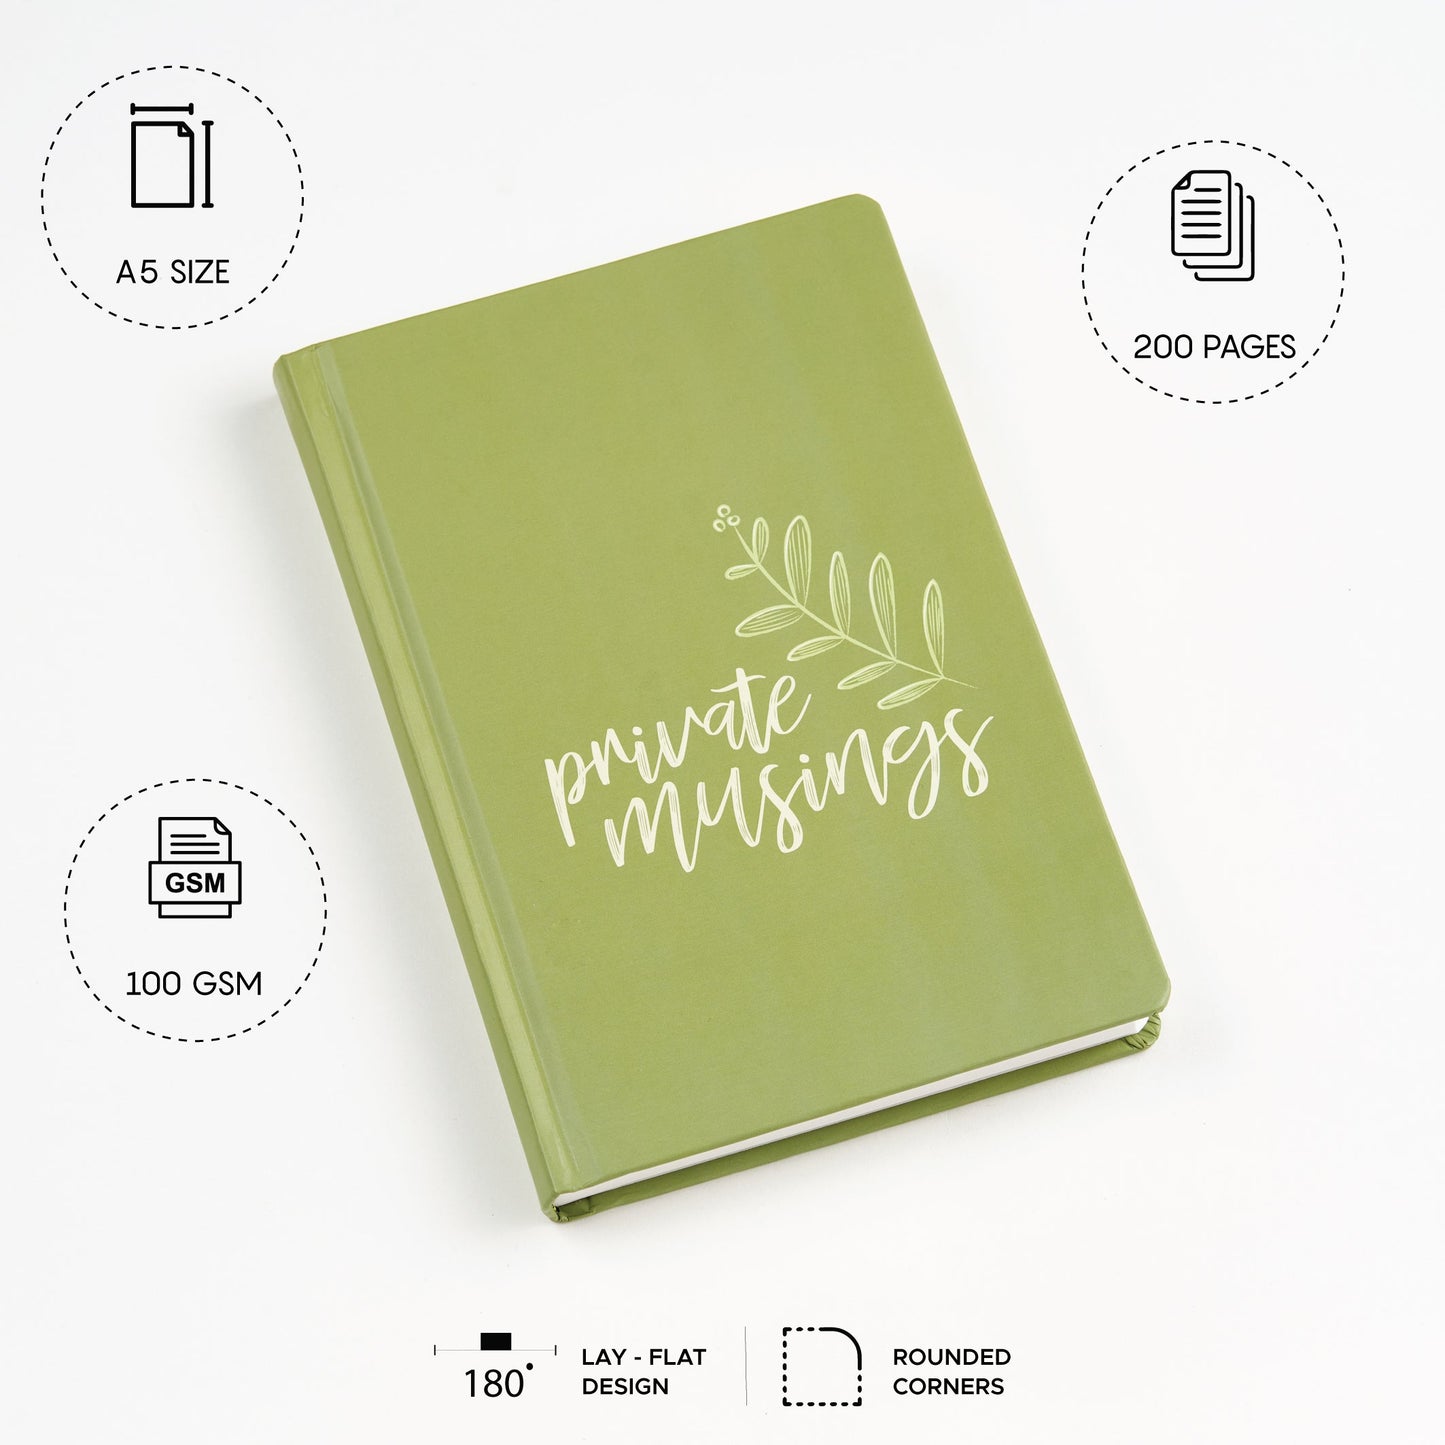 Private Musings - Designer Hard Cover Notebooks